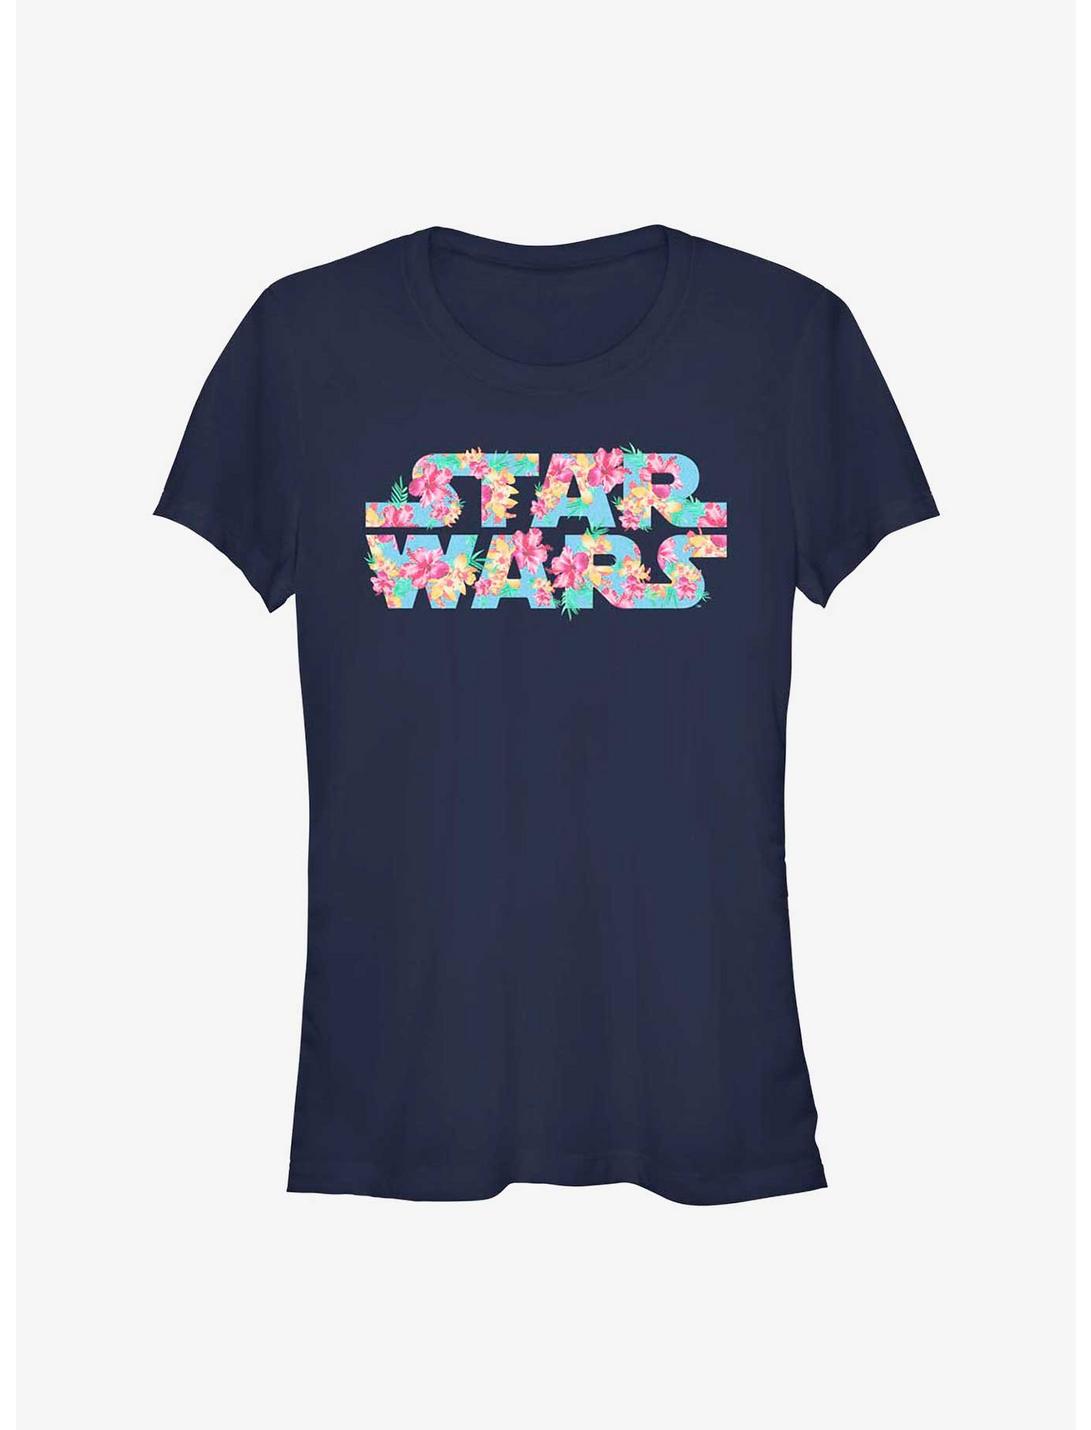 Star Wars Hibiscus Wars Girls T-Shirt, NAVY, hi-res